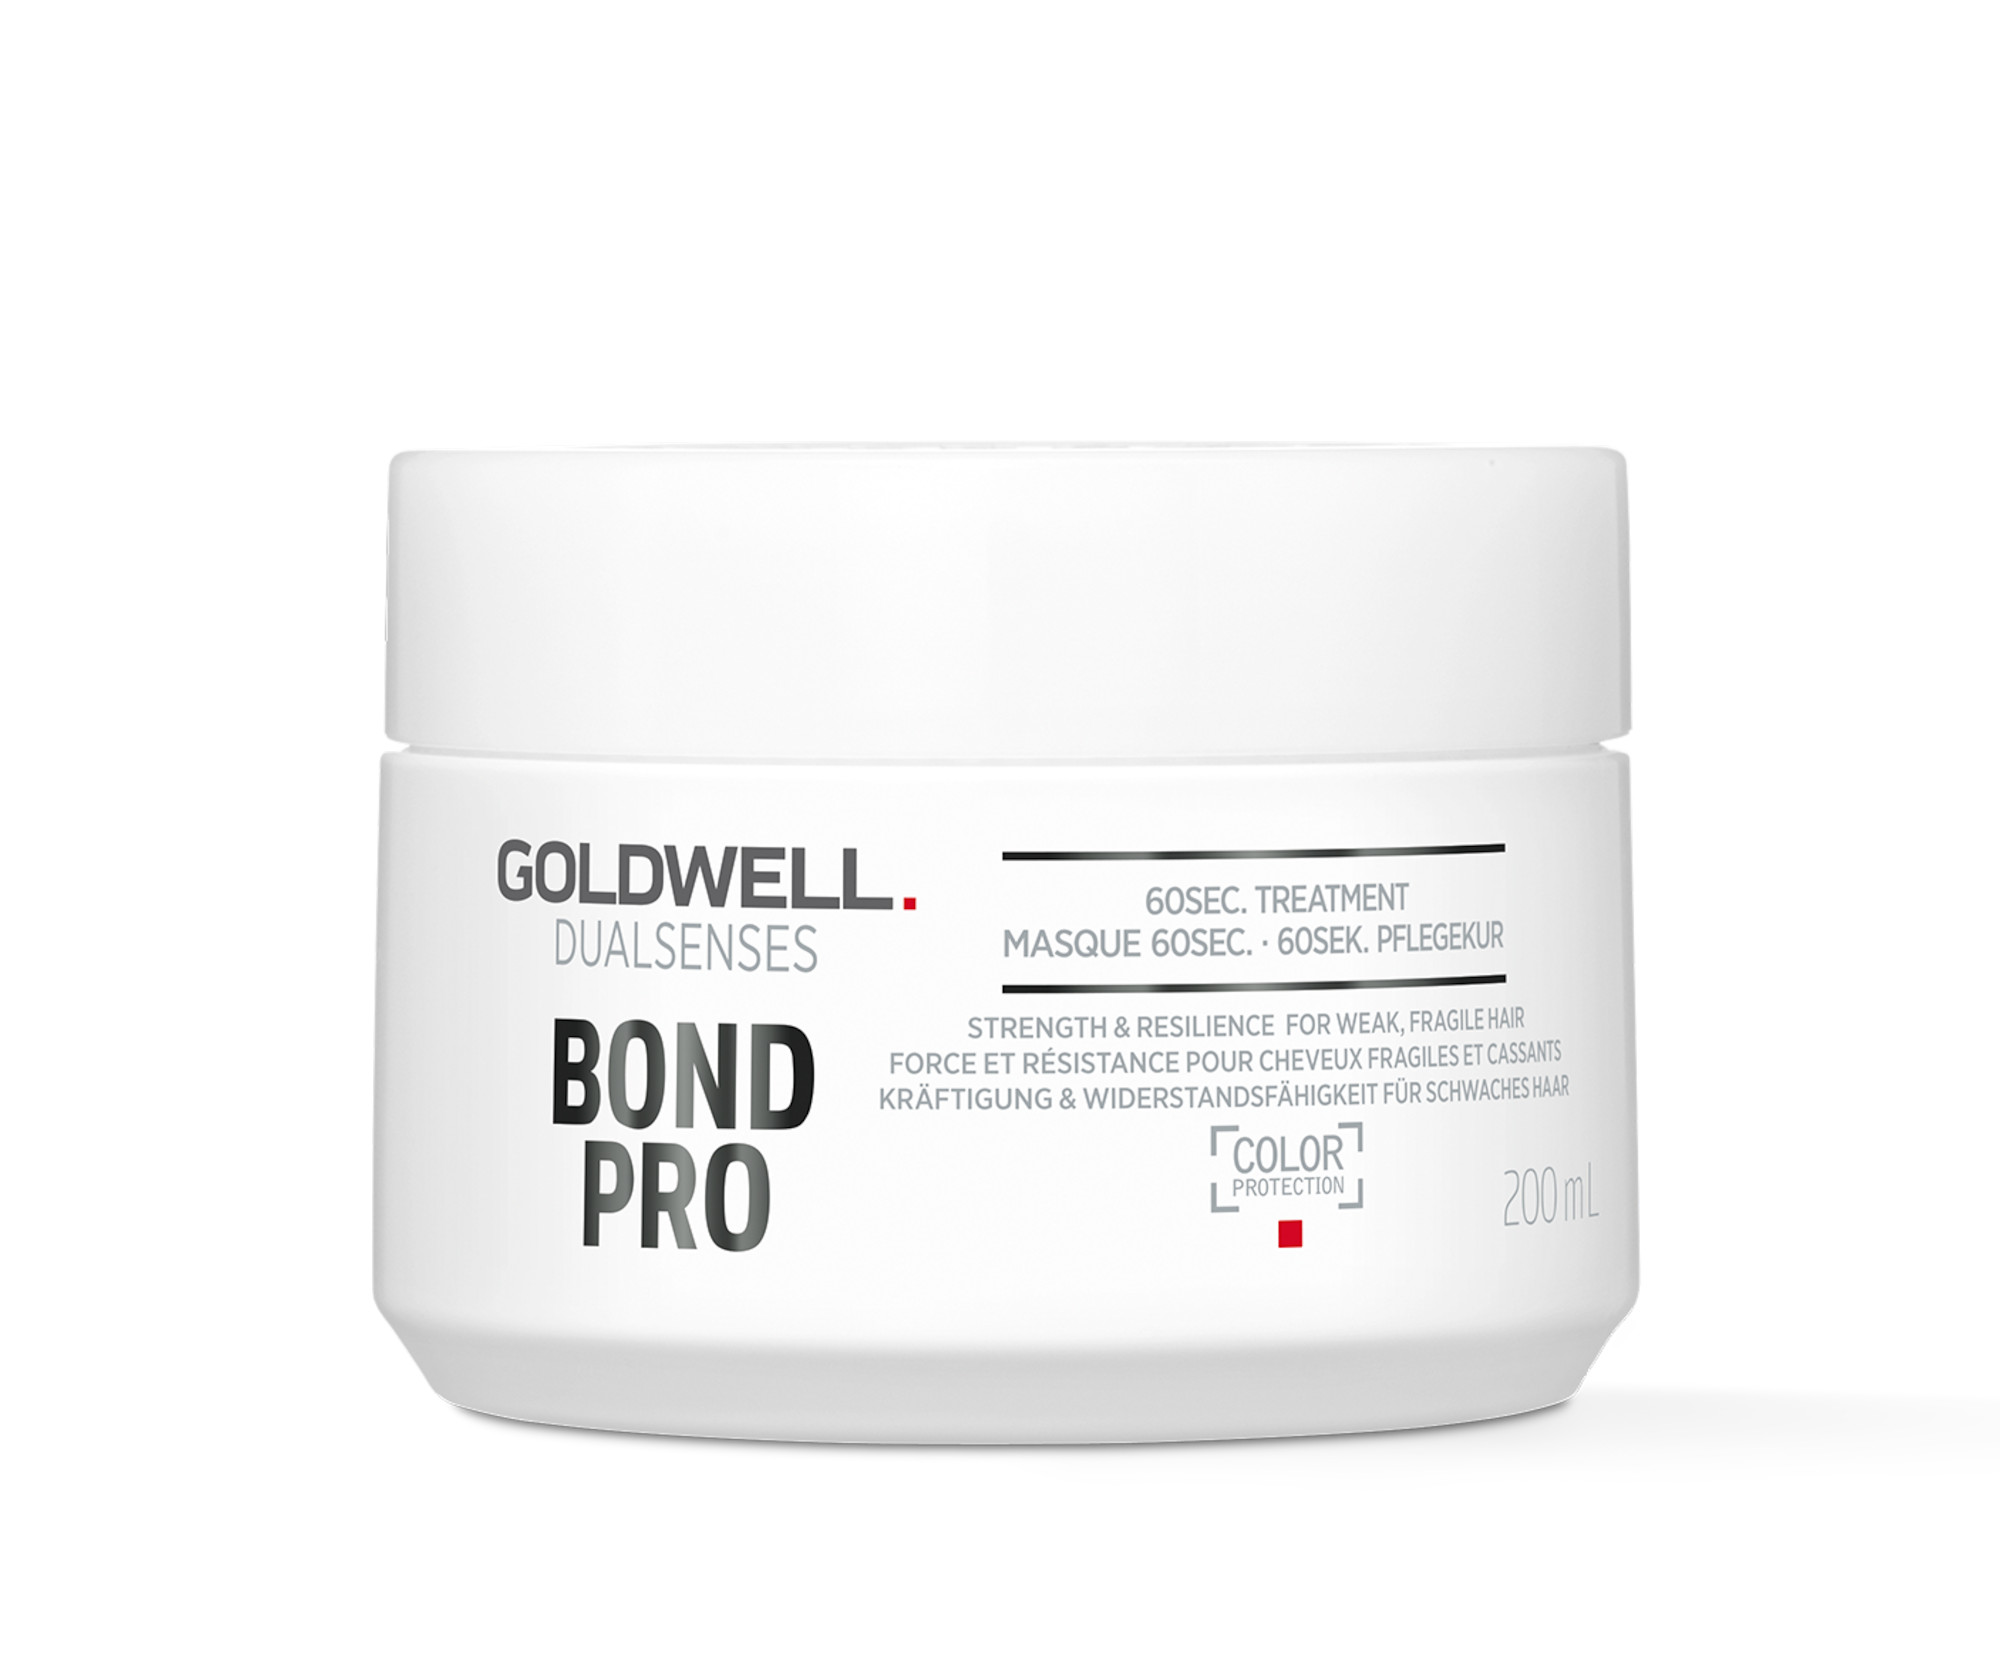 Posilující maska pro slabé a křehké vlasy Goldwell Dualsenses Bond Pro - 200 ml (206235) + DÁREK ZDARMA